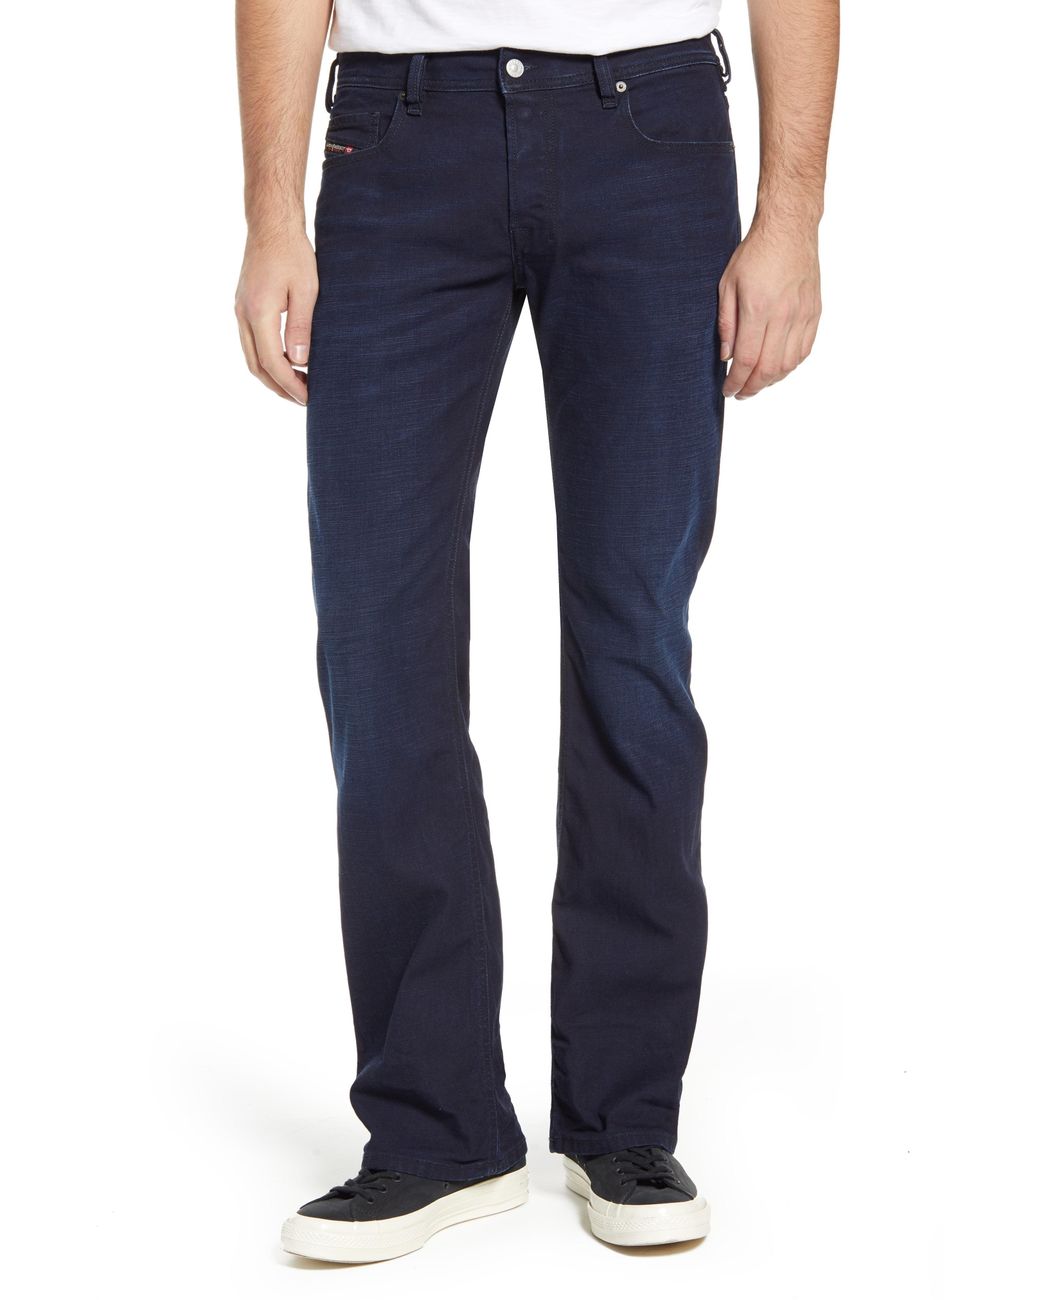 DIESEL Denim Diesel Zatiny Bootcut Jeans in Dark Blue (Blue) for Men - Lyst